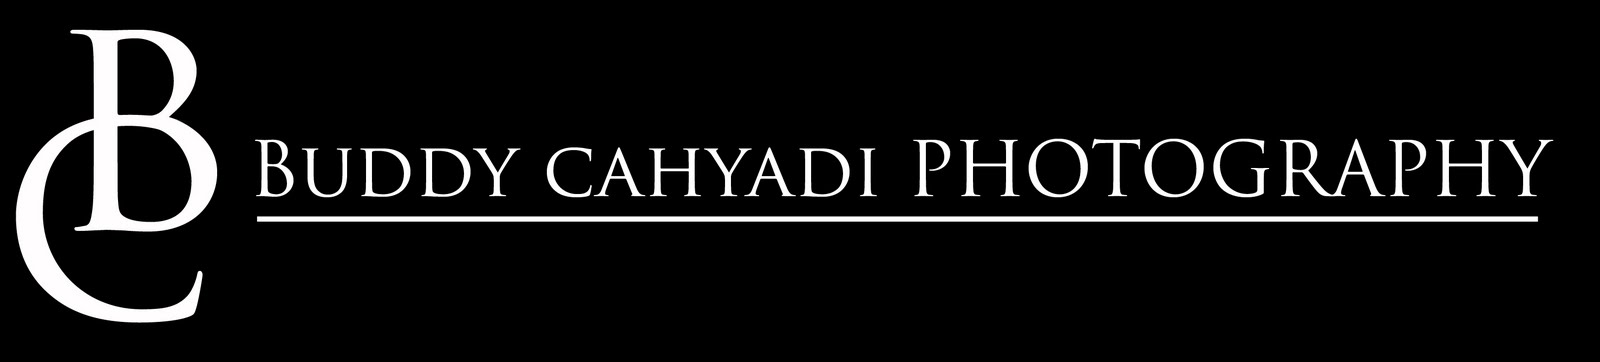 BUDI CAHYADI PHOTOGRAPHY